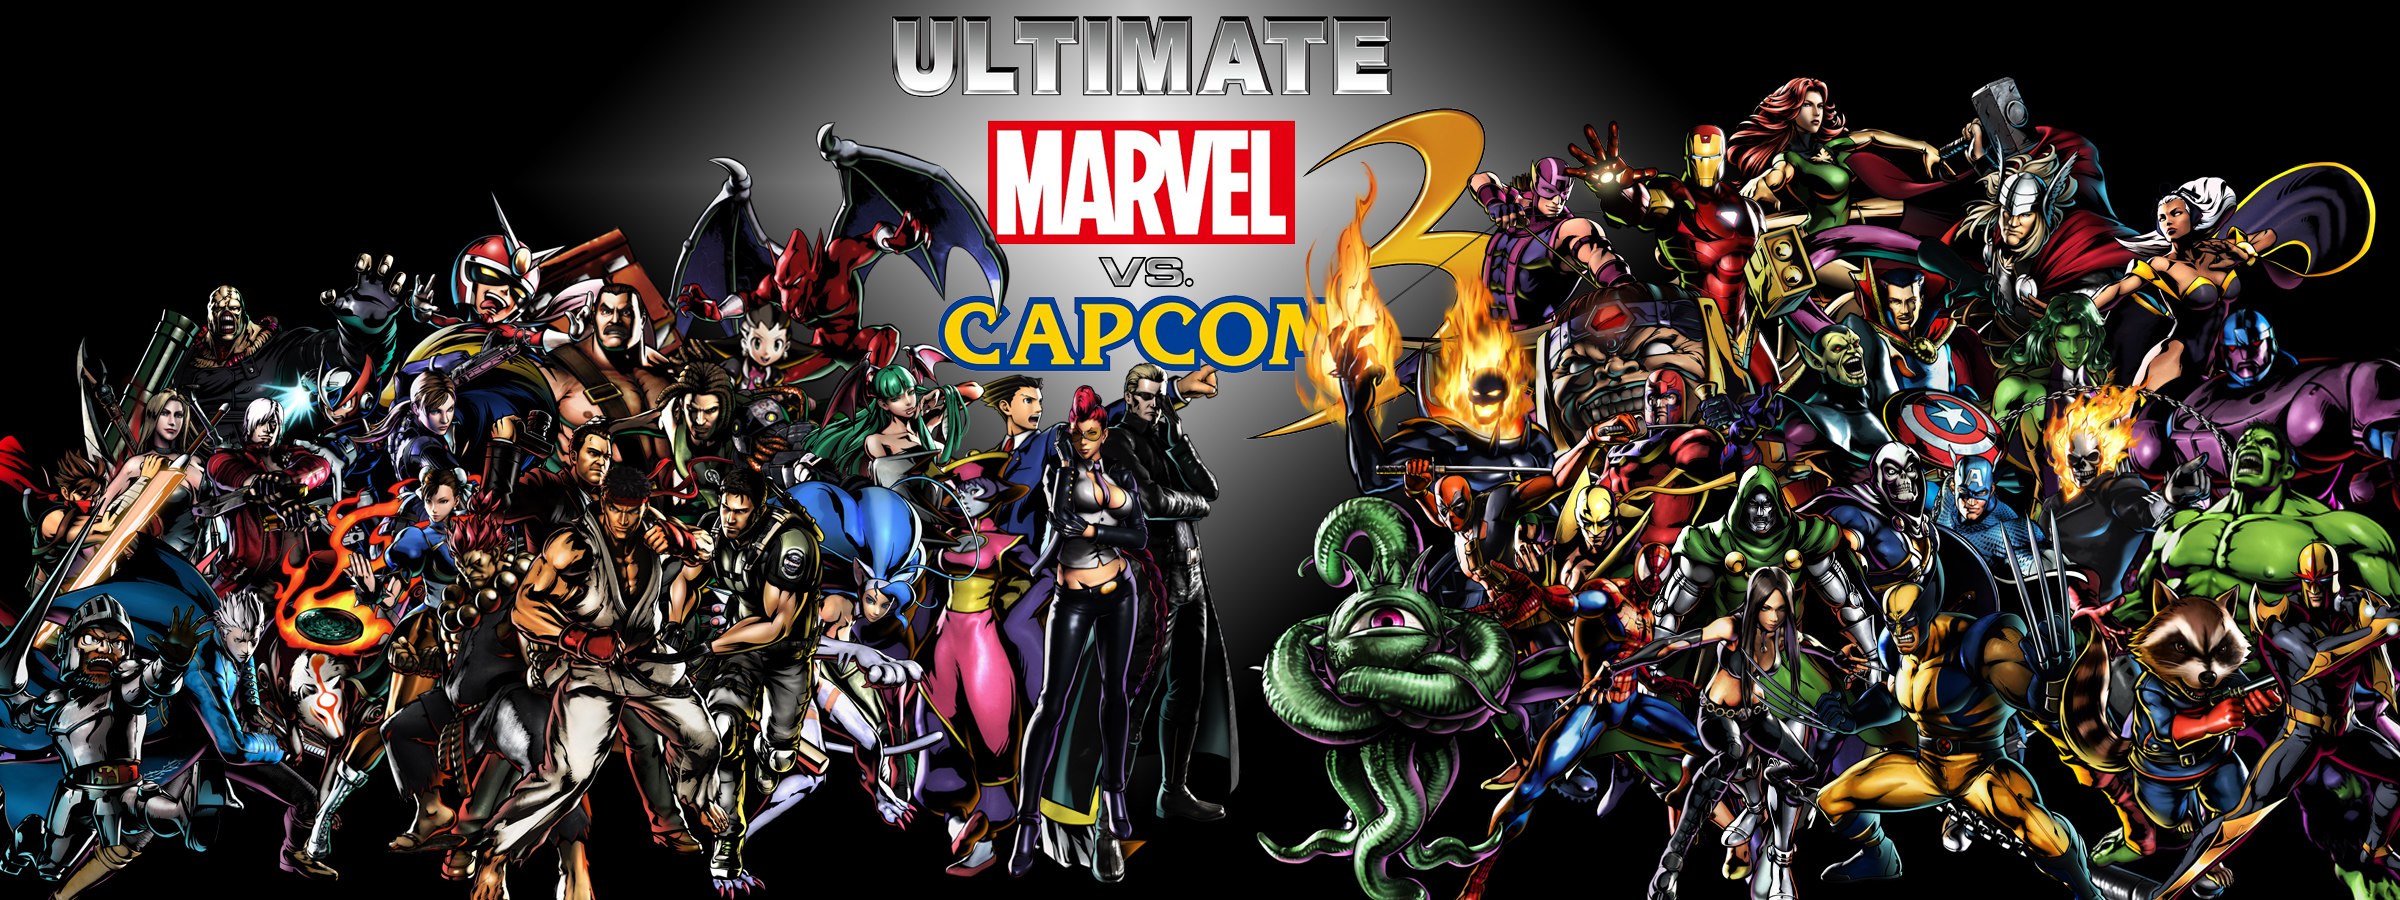 High Resolution Wallpaper | Ultimate Marvel Vs. Capcom 3 2400x900 px